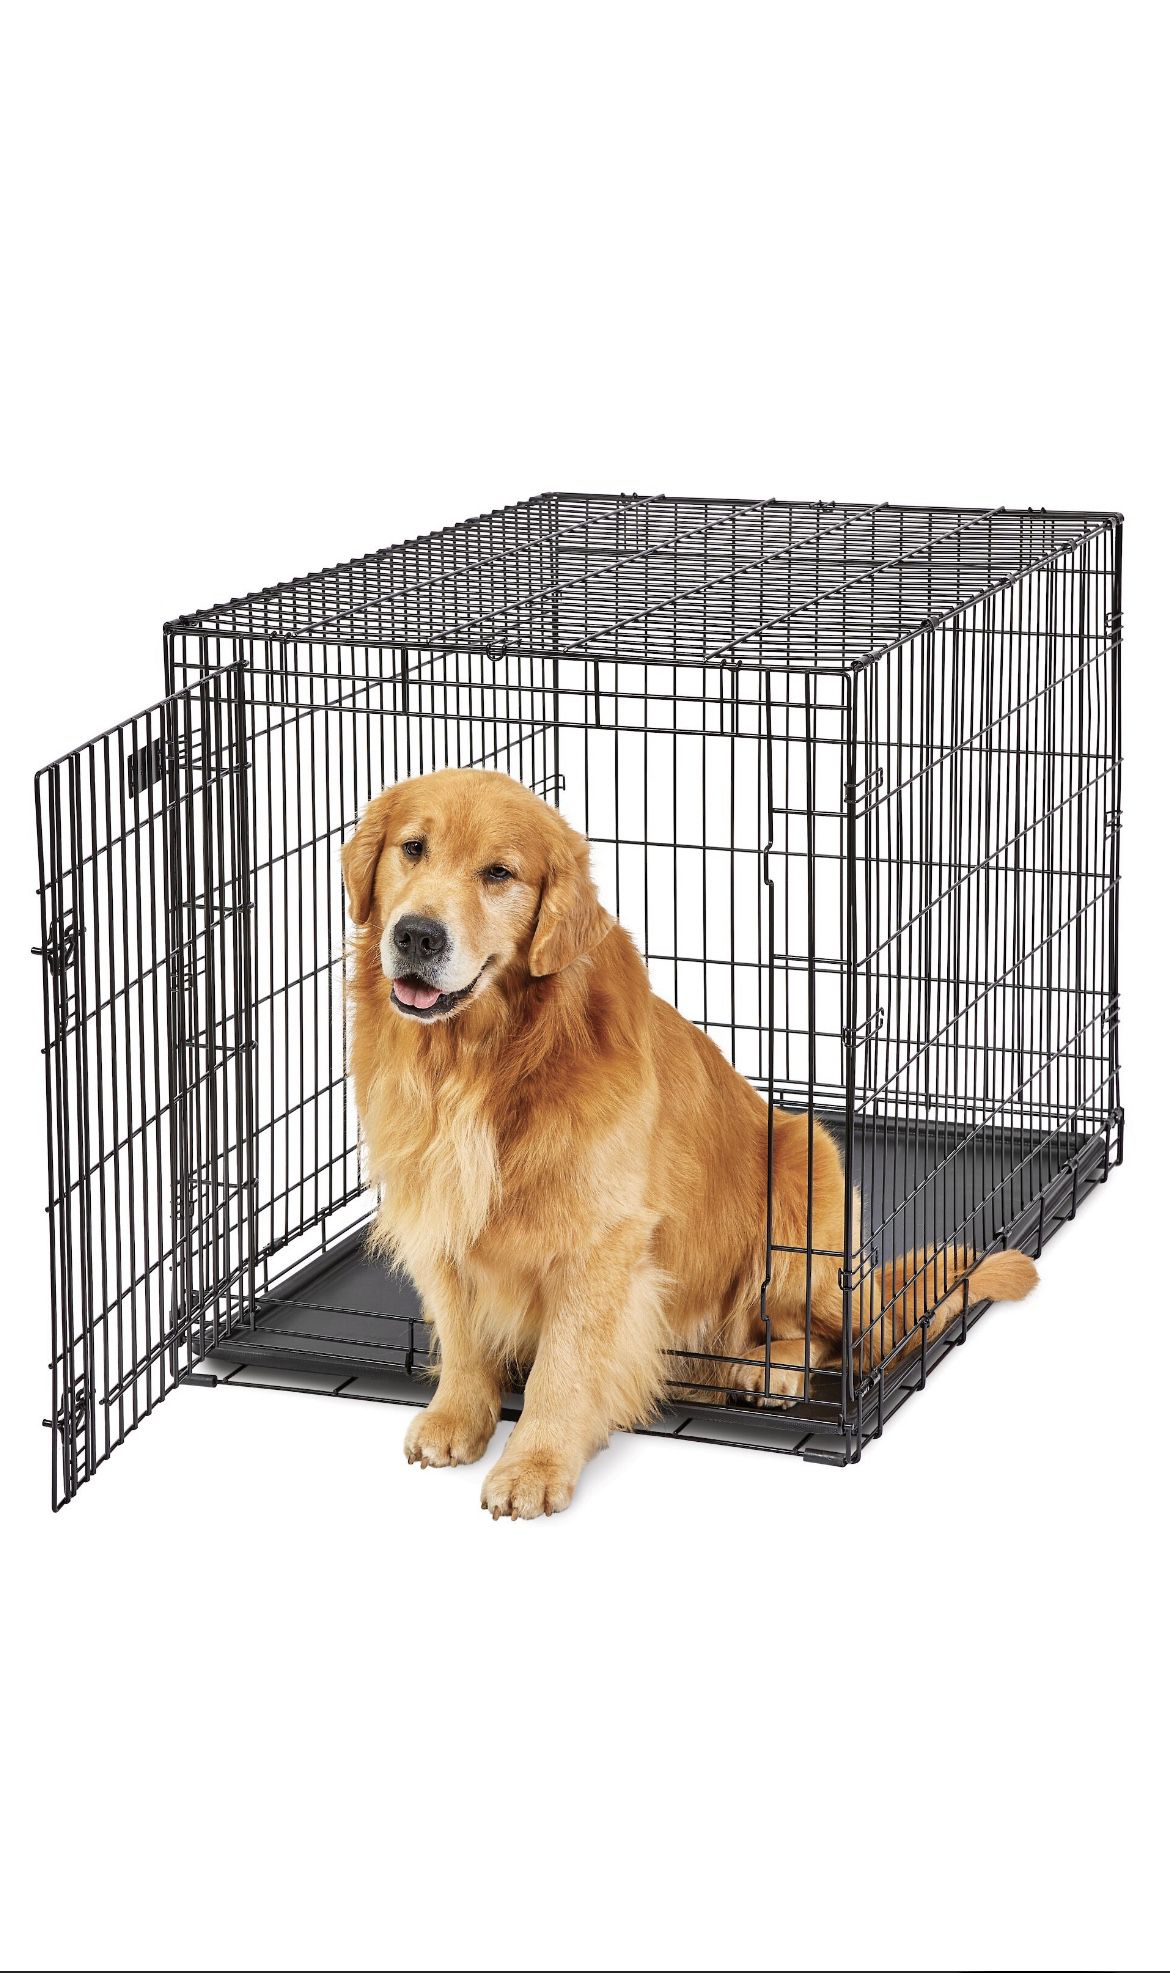 Metal Dog Crates